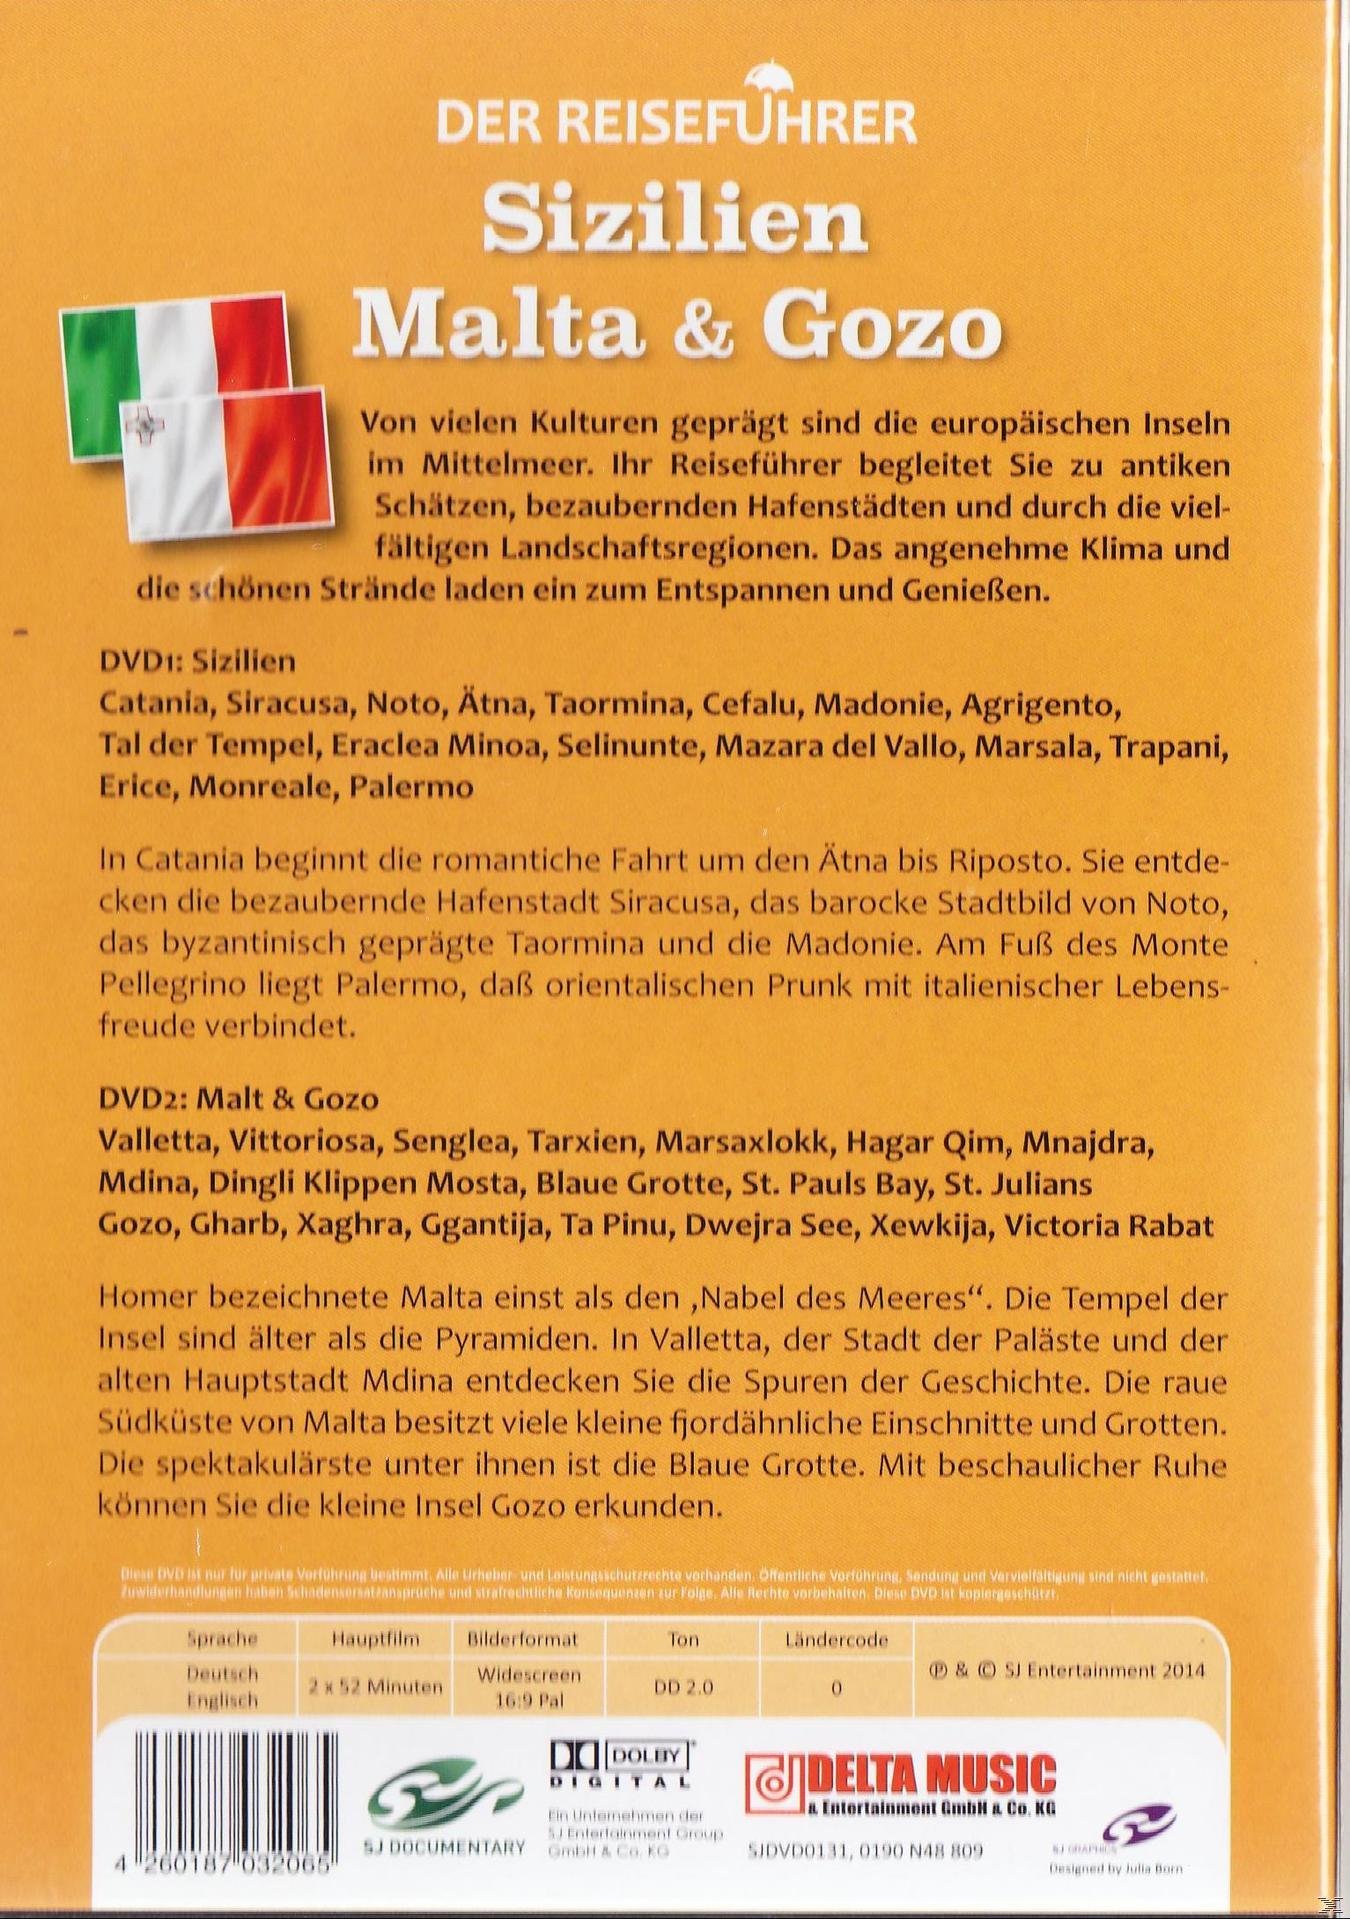 Der Reiseführer - Sizilien, Malta DVD Gozo 